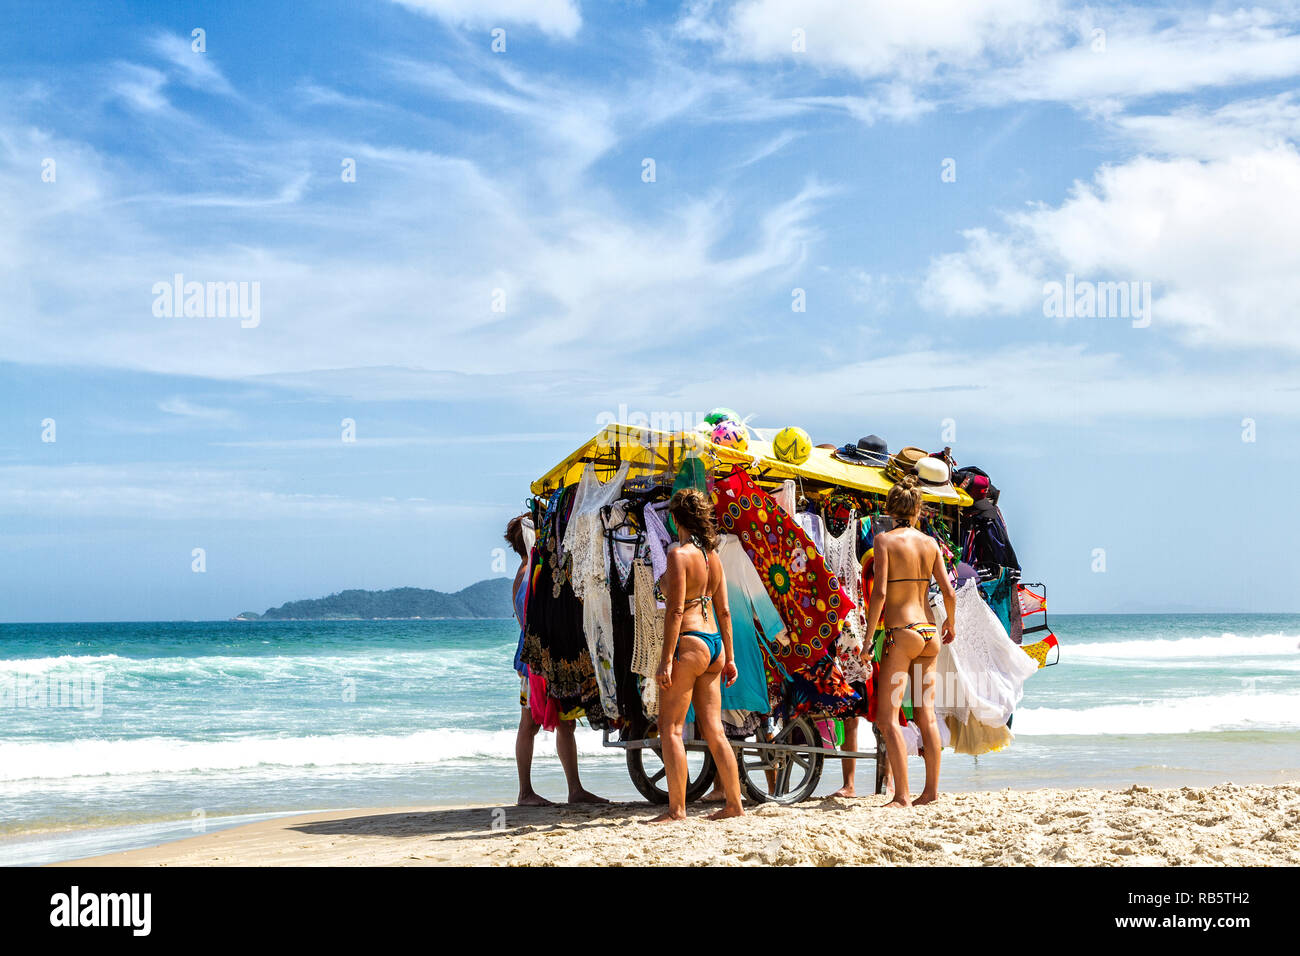 Strandverkäufer, der Kleidung am Acores Beach verkauft. Florianopolis, Santa Catarina, Brasilien. Stockfoto